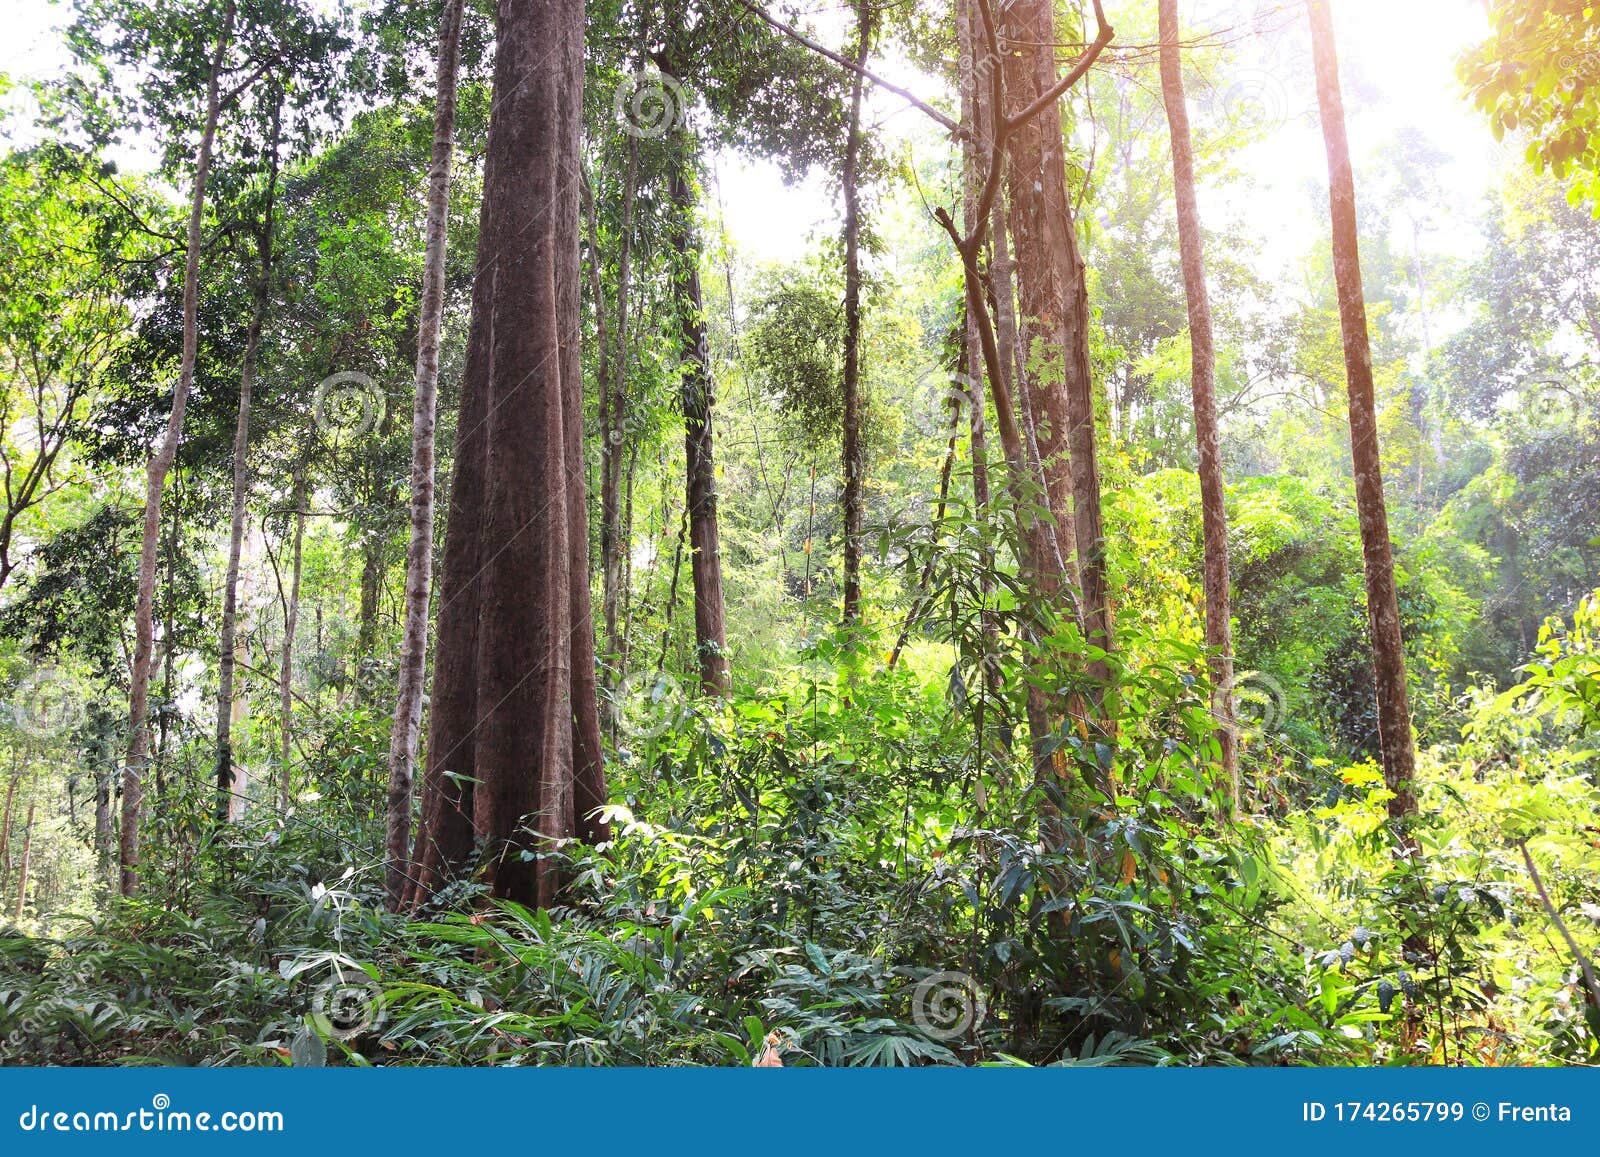 Bemyndigelse Decode Tochi træ Tropical Jungle during the Dry Season, Cambodia Stock Image - Image of  rainforest, indochina: 174265799